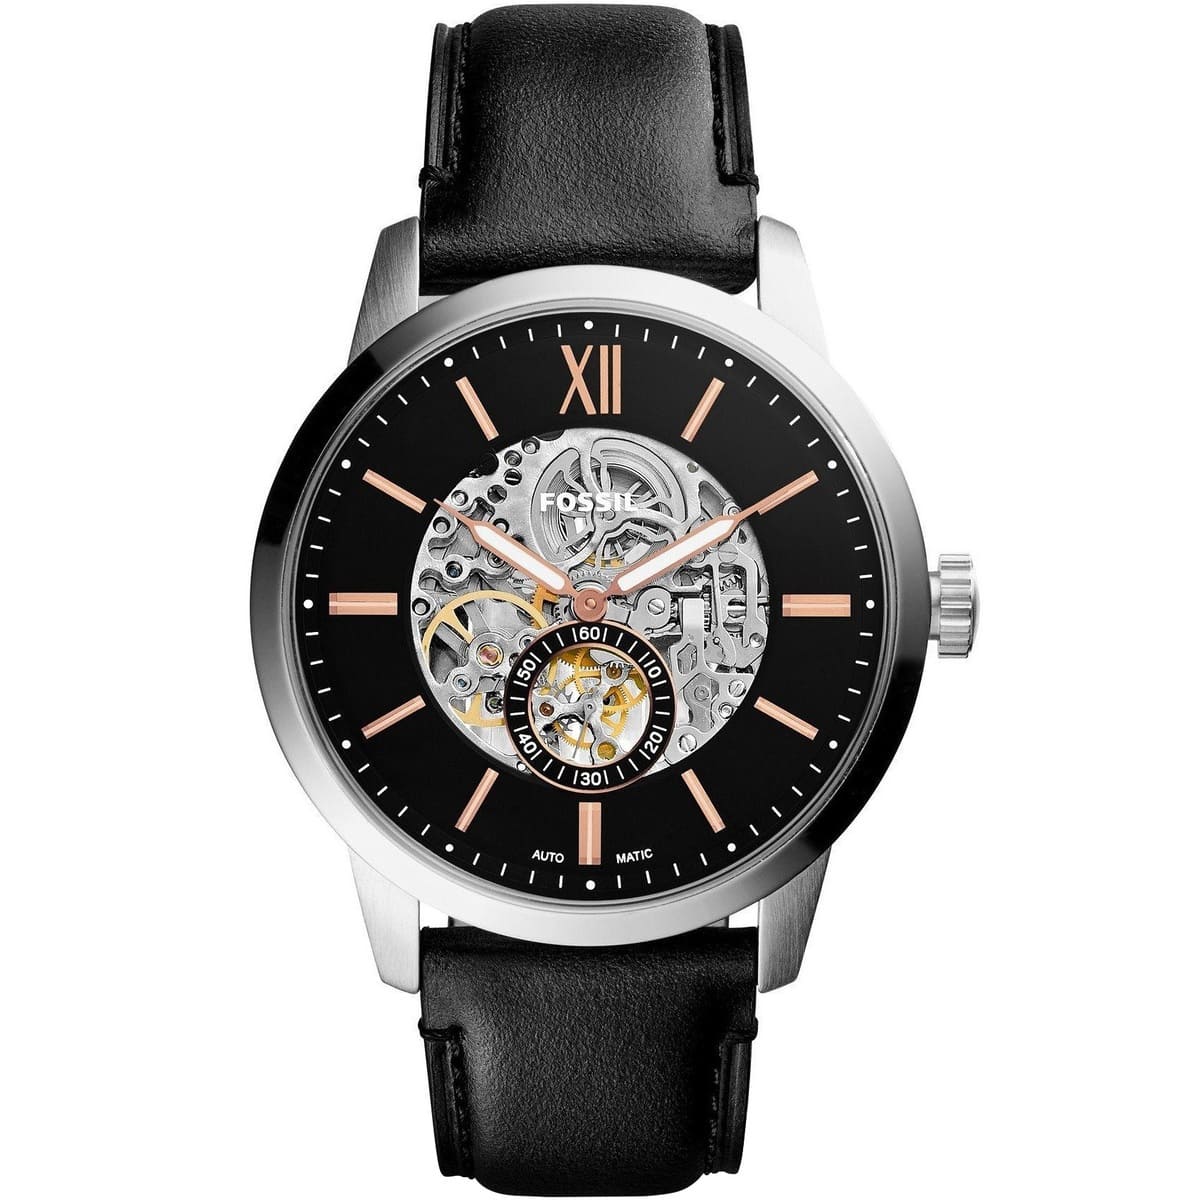 me3153-original-automatic-fossil-watch-black-leather-men